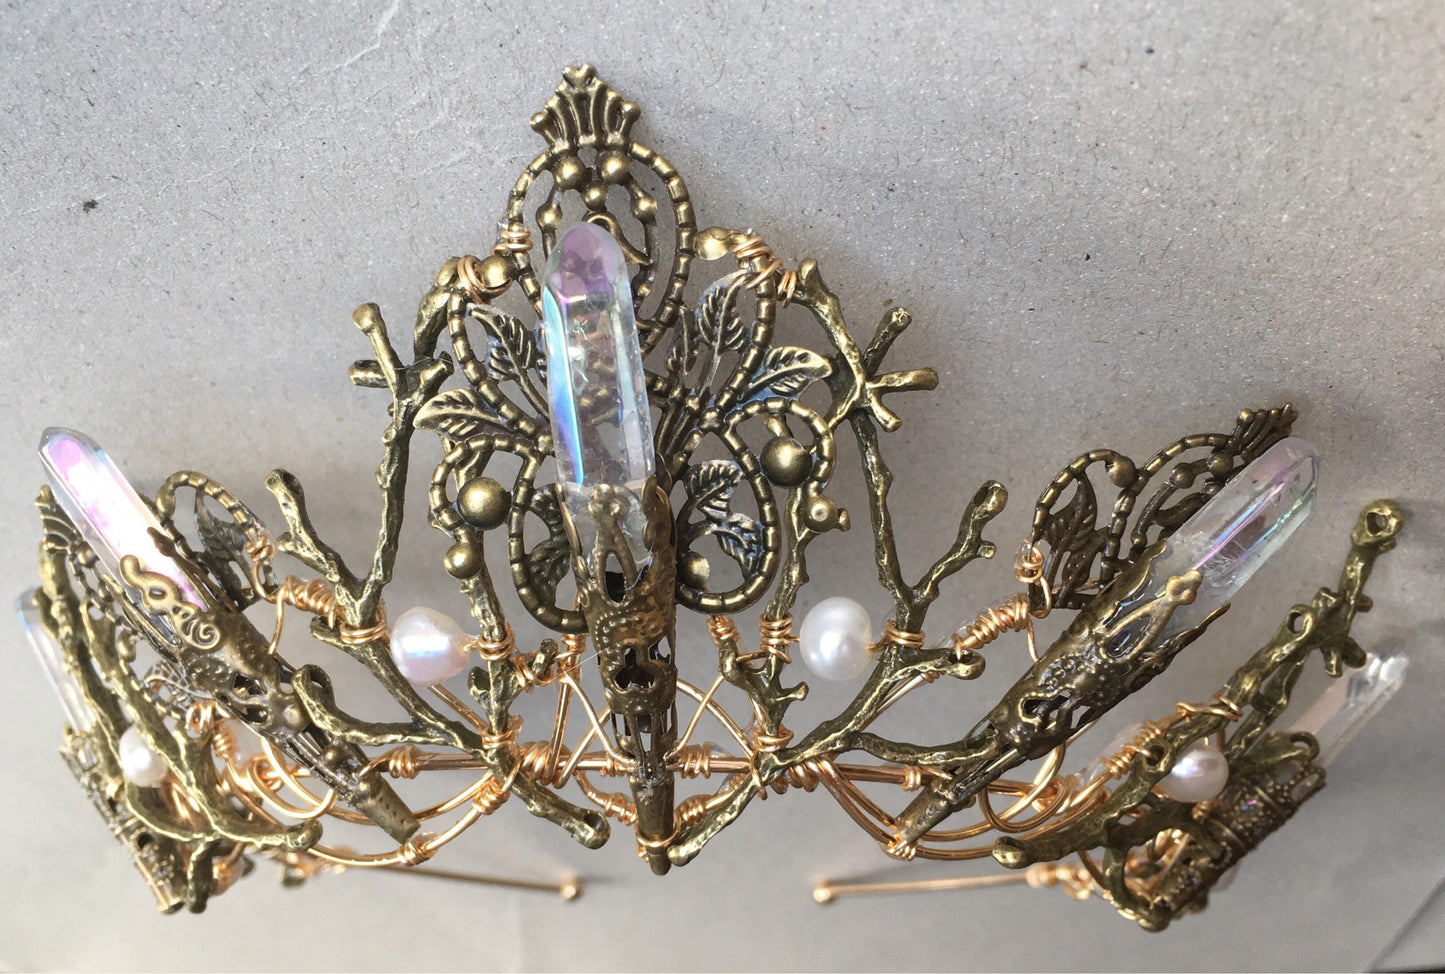 The EVANGELINE Angel Aura Crown